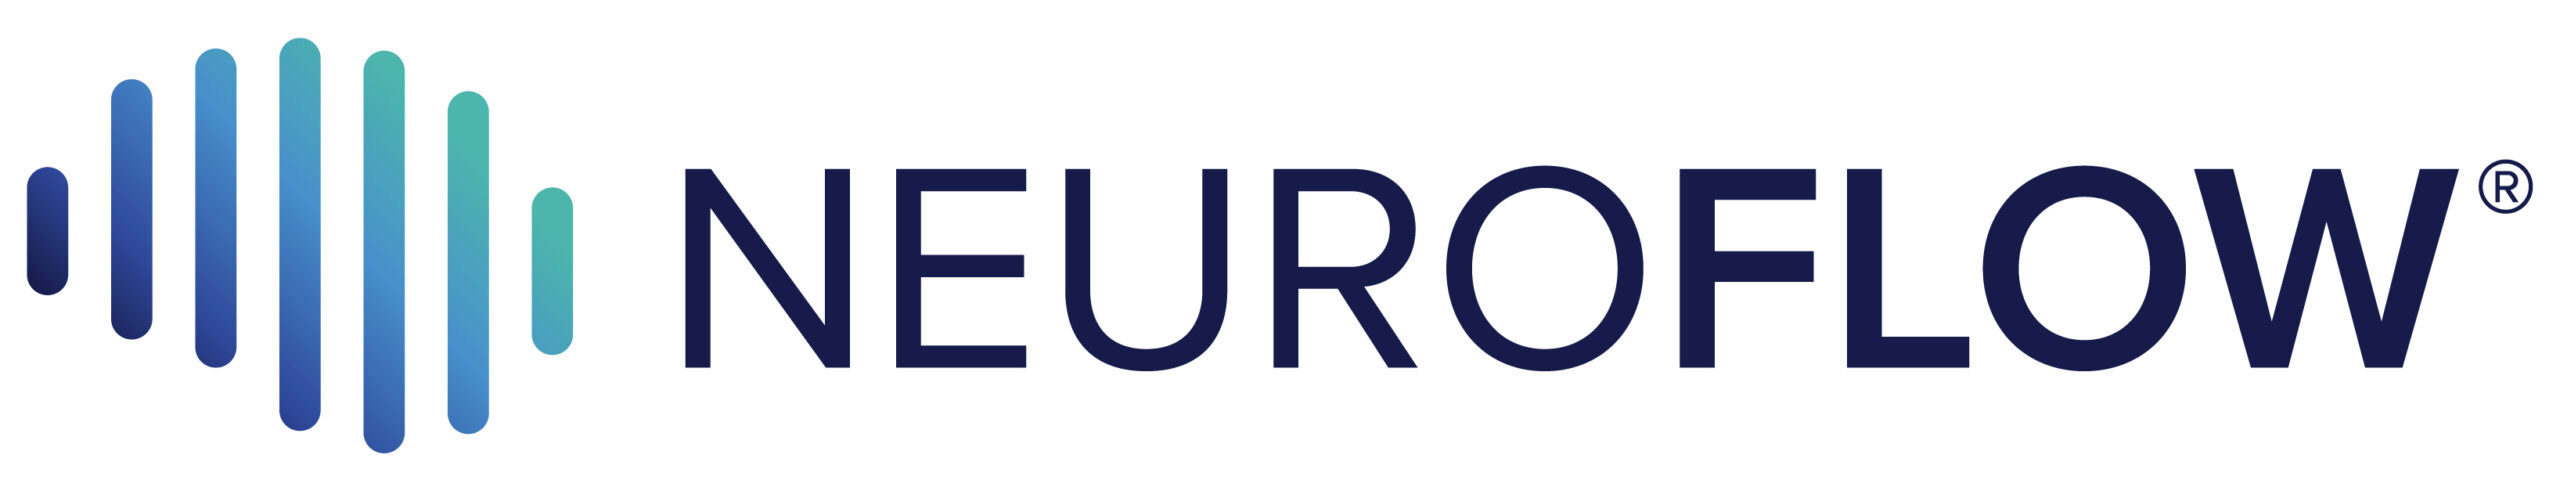 neuroflow logo